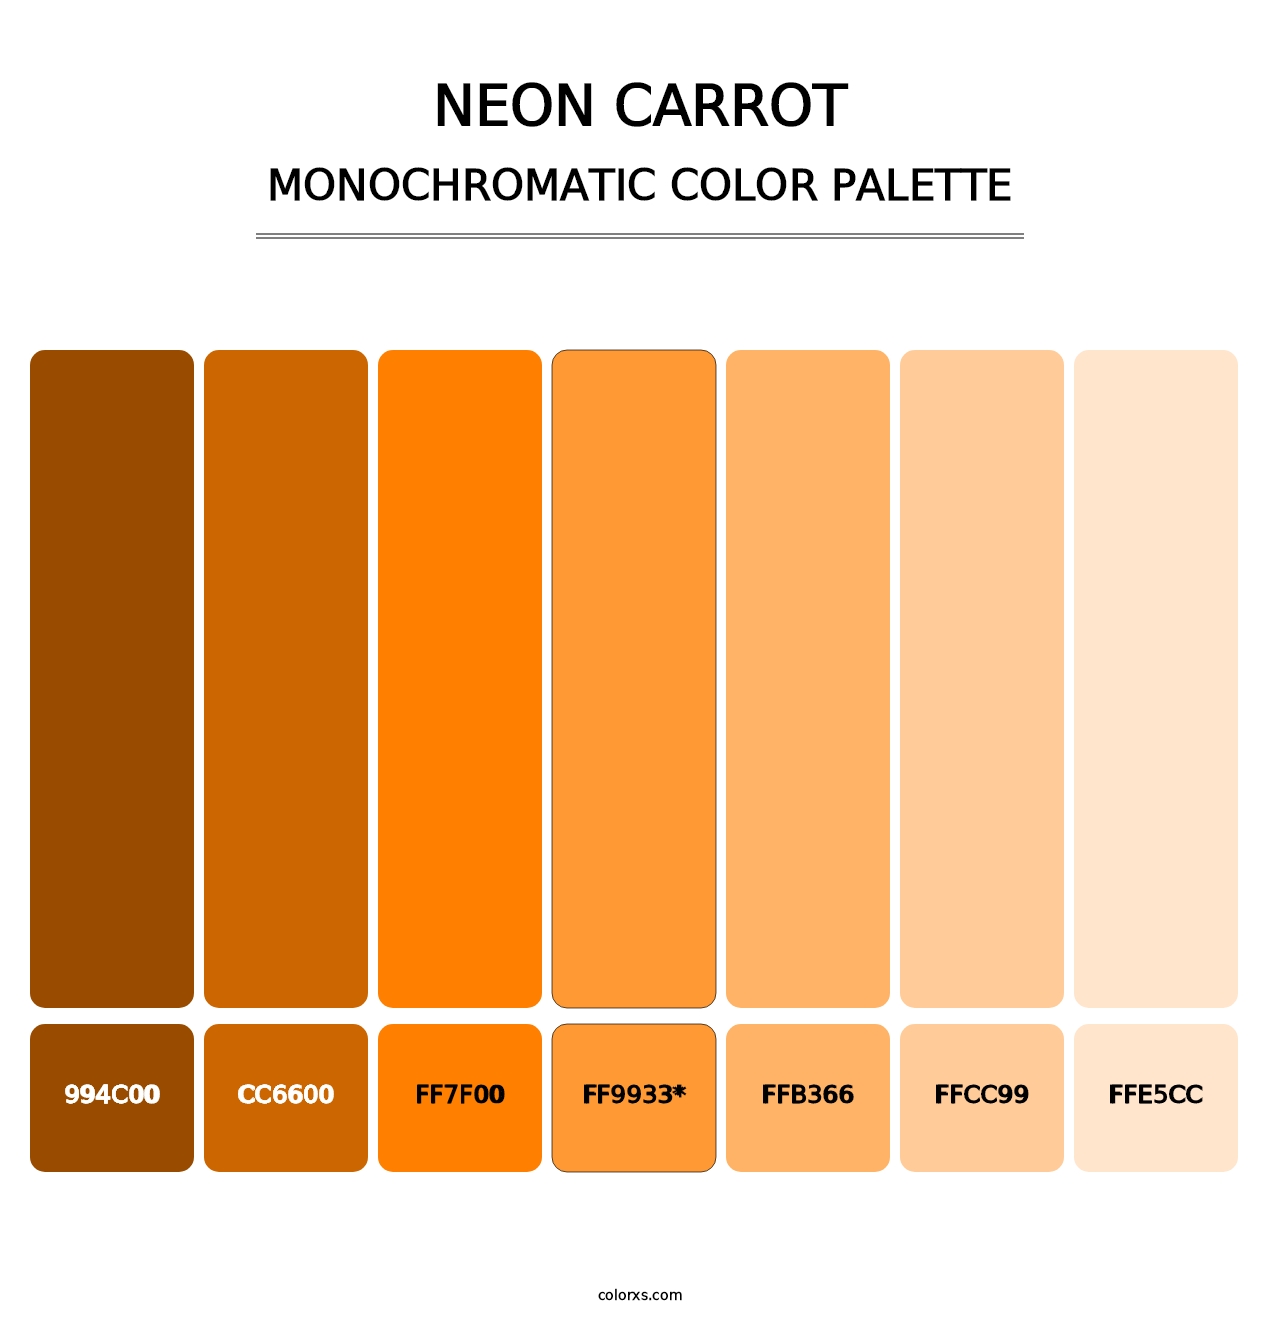 Neon Carrot - Monochromatic Color Palette